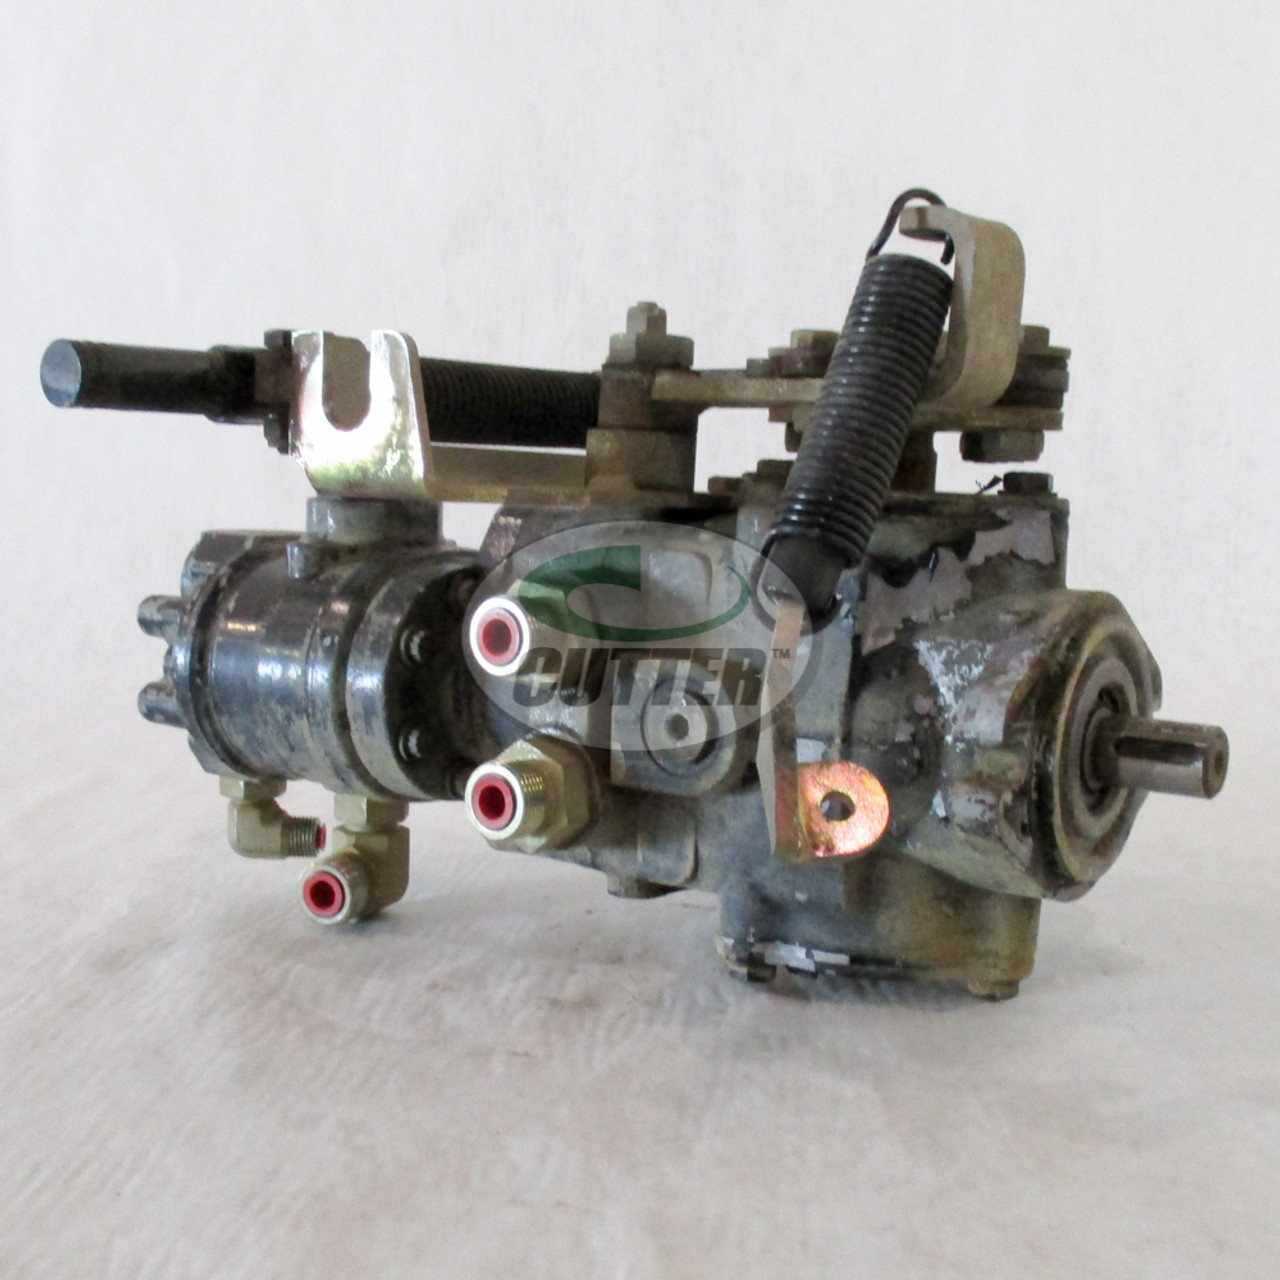 Toro Used Hydro Gear Pump - Part #: 99-8152